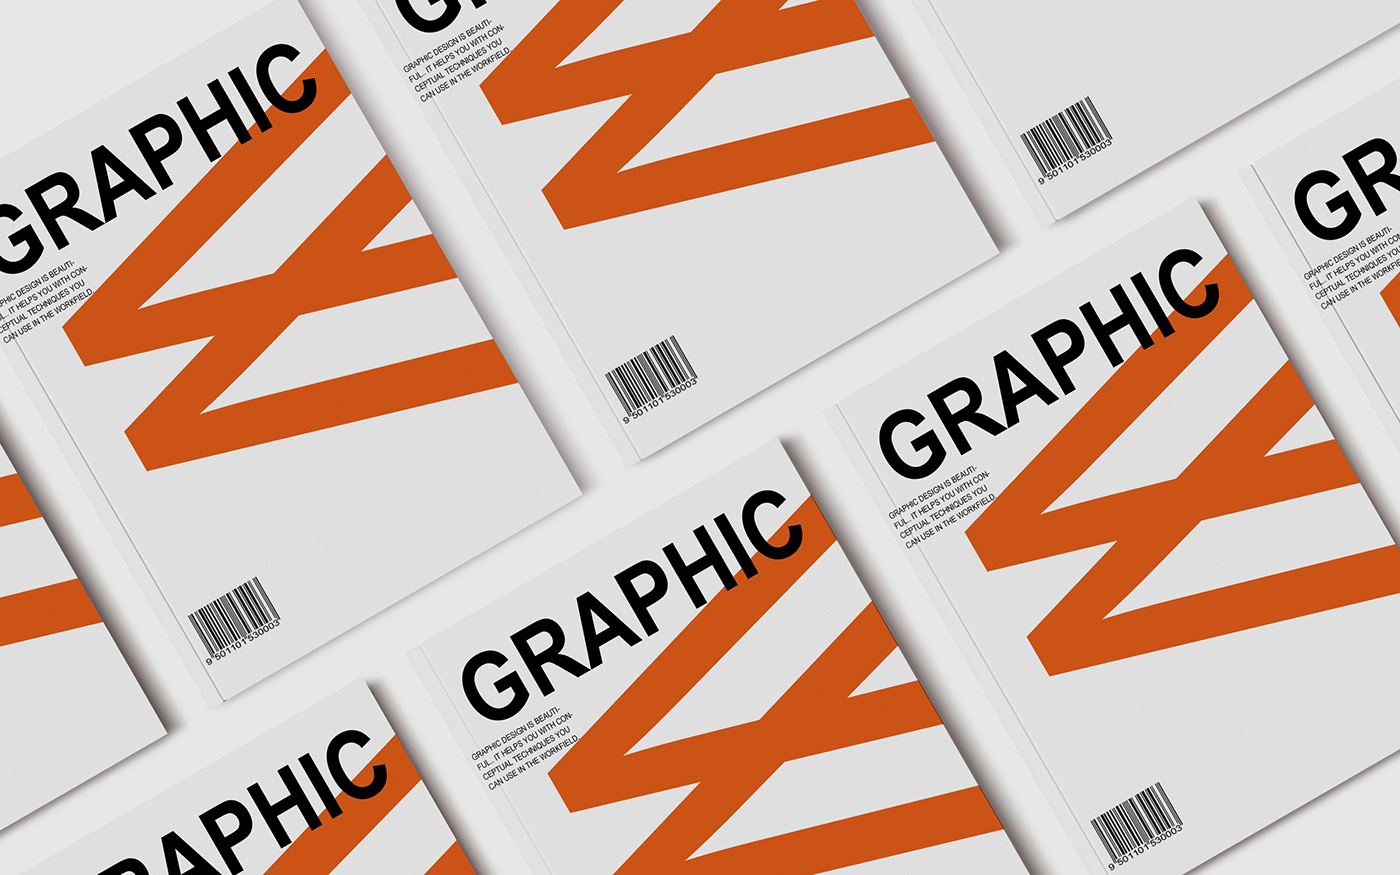 printdesign magazine AdobeIndesign adobephotoshop creative editorialdesign graphicdesign book